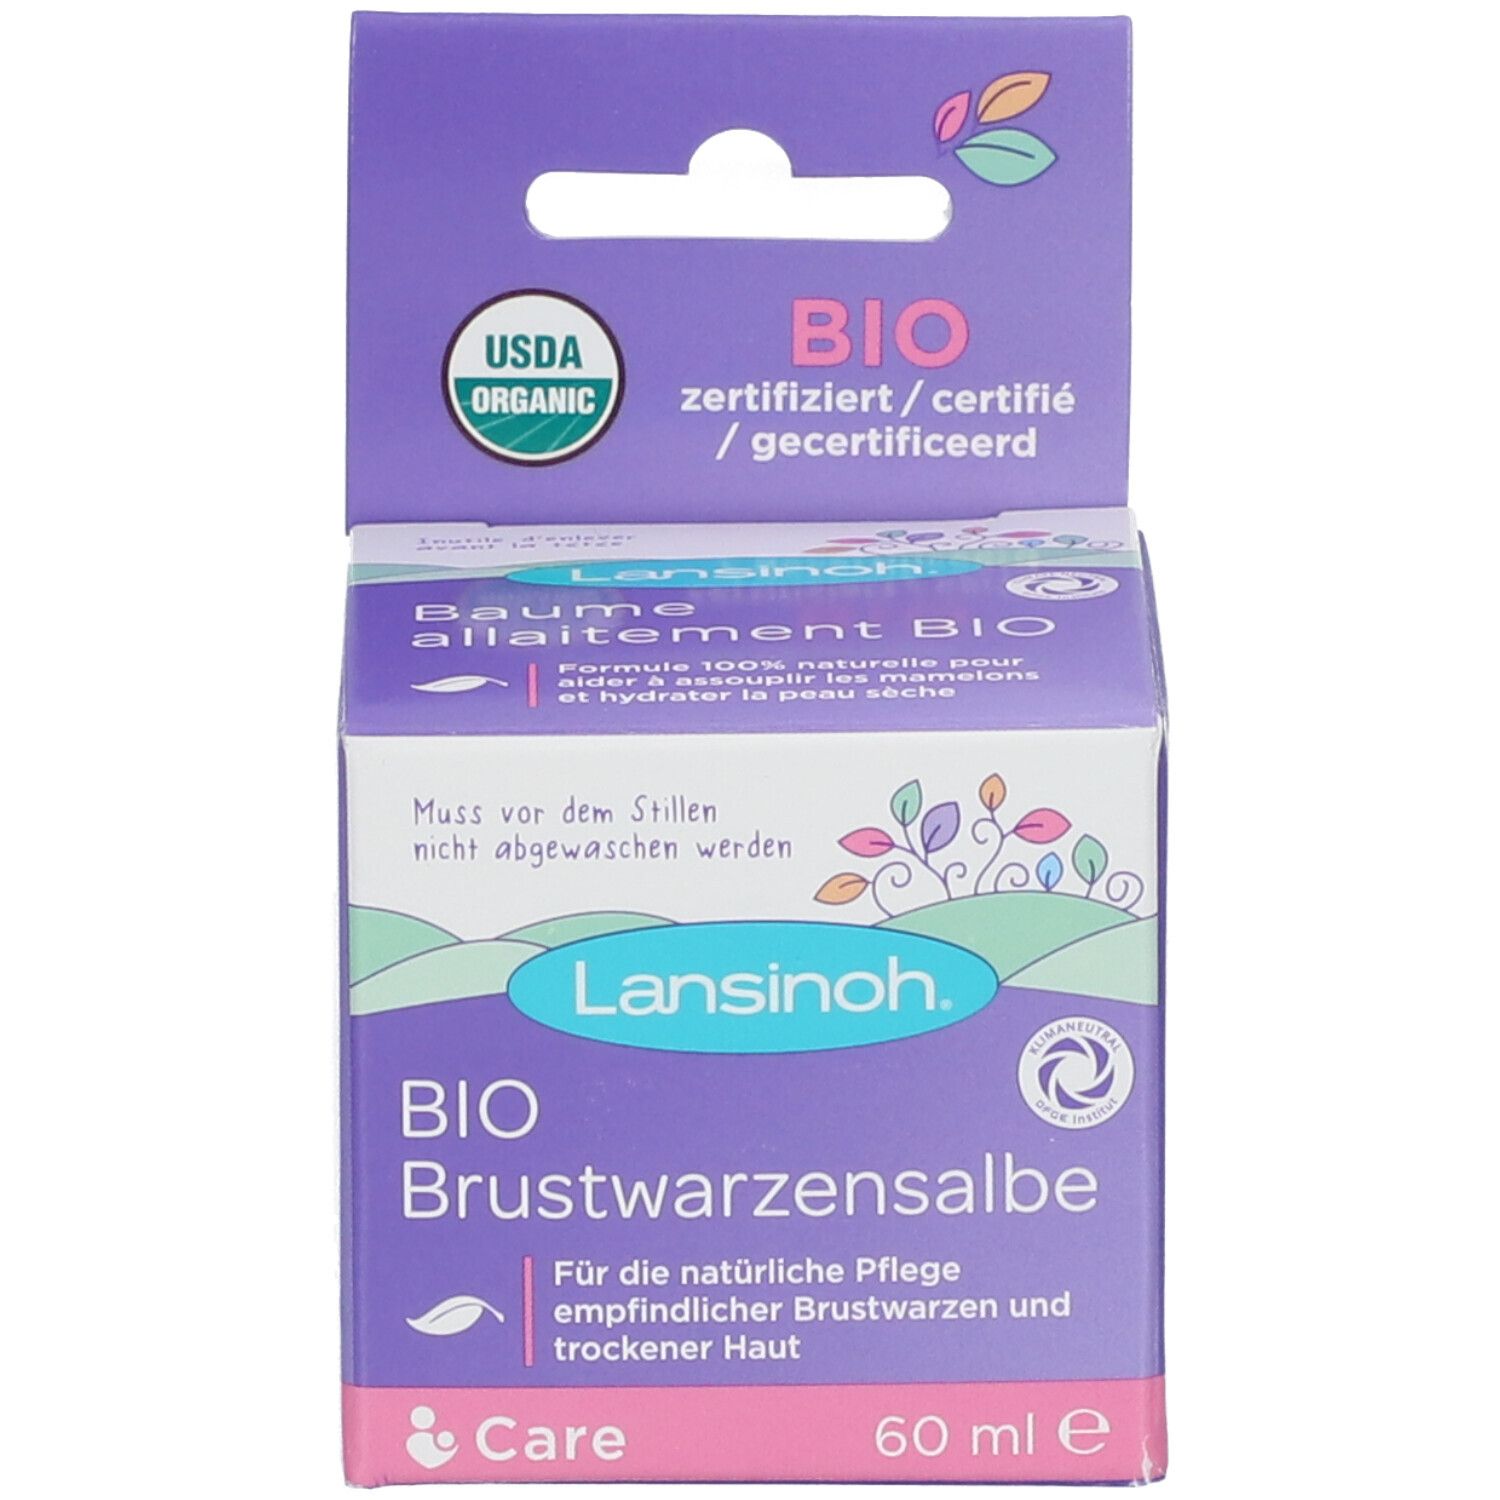 Lansinoh® Bio Brustwarzensalbe